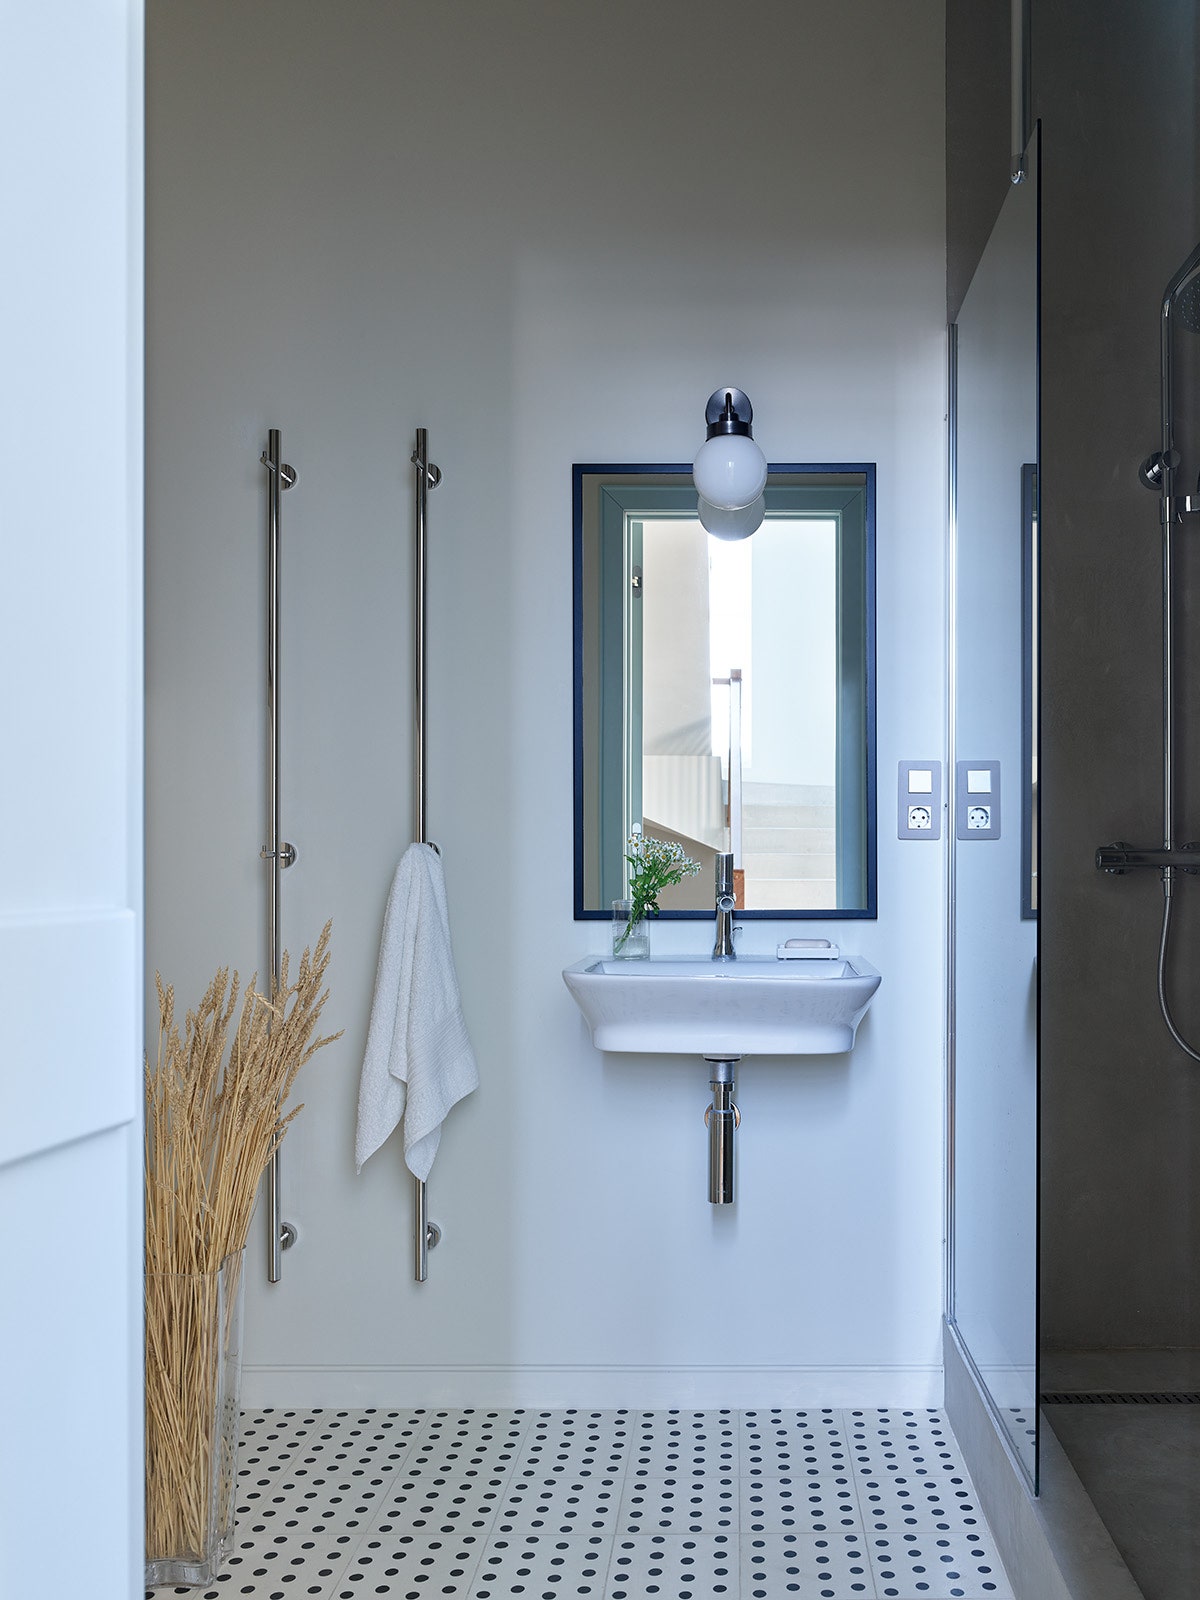 Ванная комната с душевой. Сантехника Roca цементная плитка в горошек Luxemix.ru зеркало La Redoute бра IKEA.